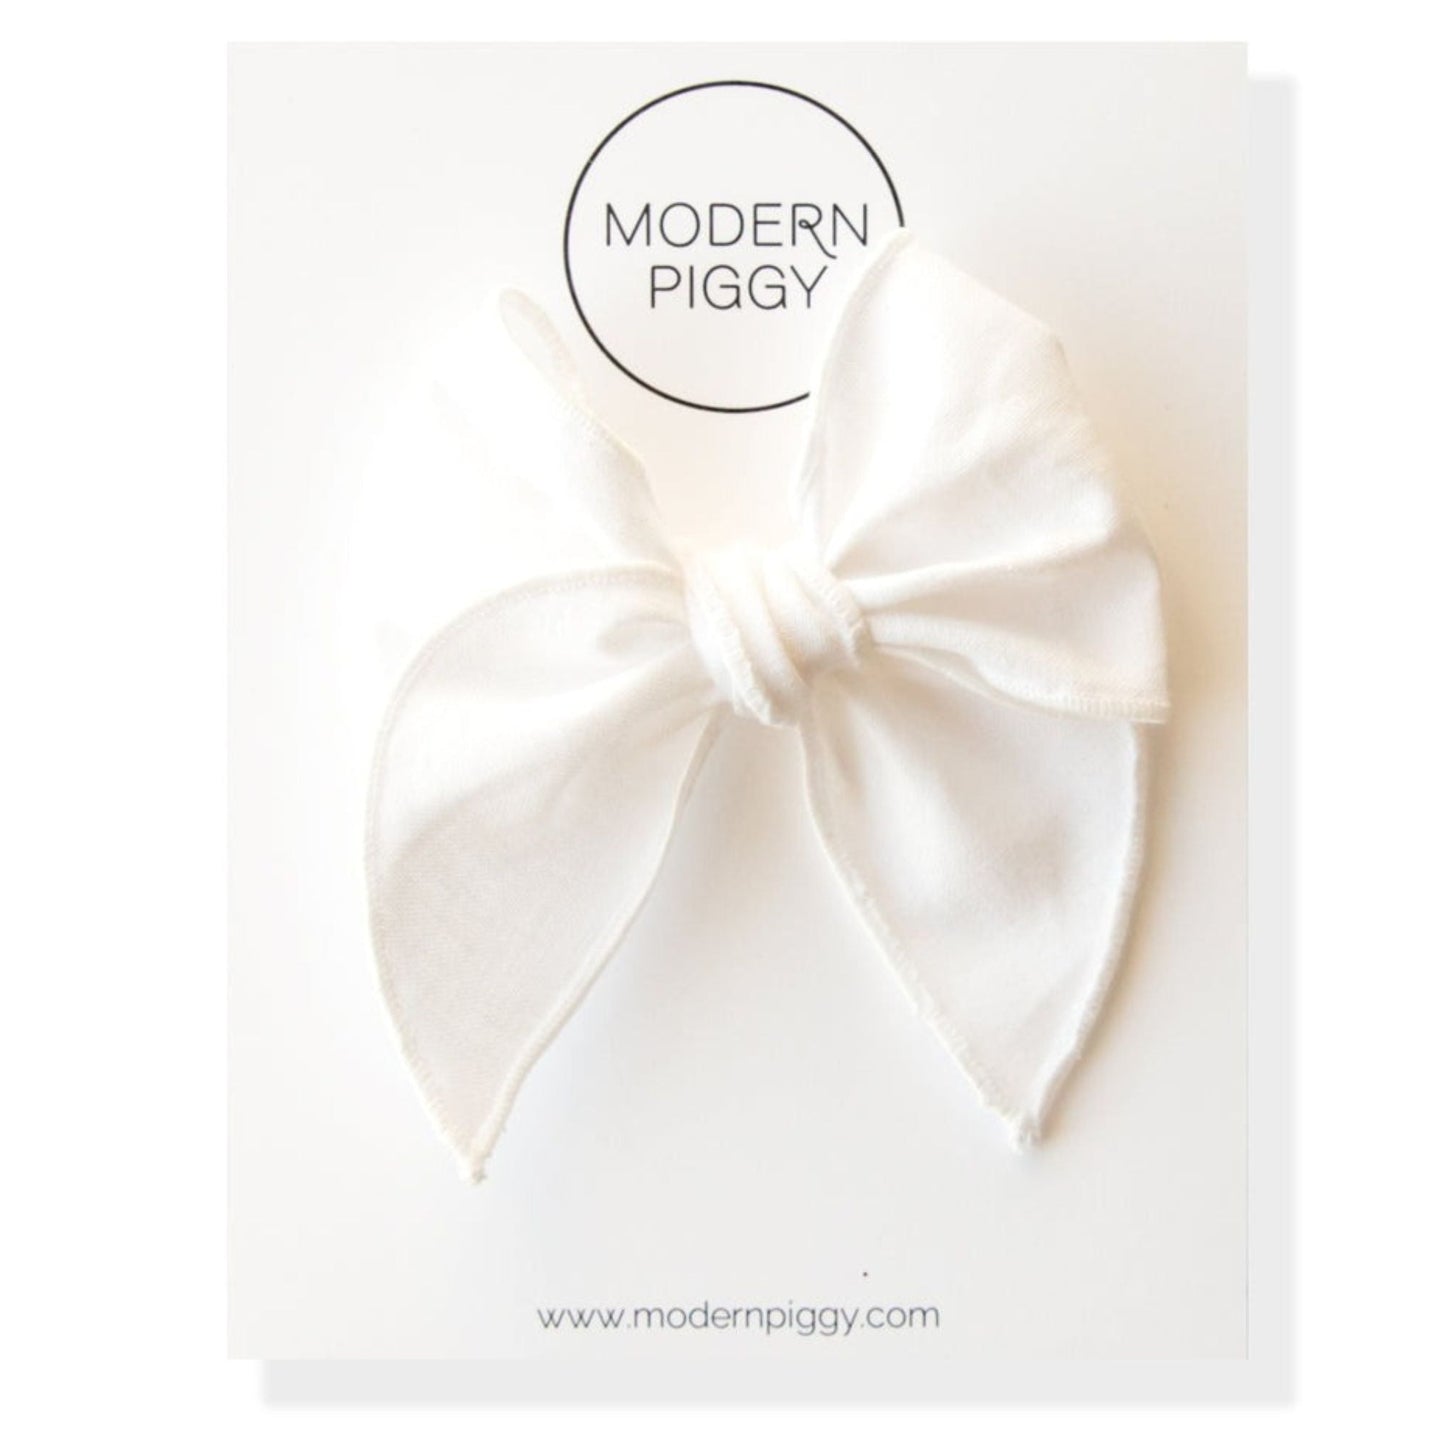 Modern Piggy Petite Party Bow - Nylon Headband - True White